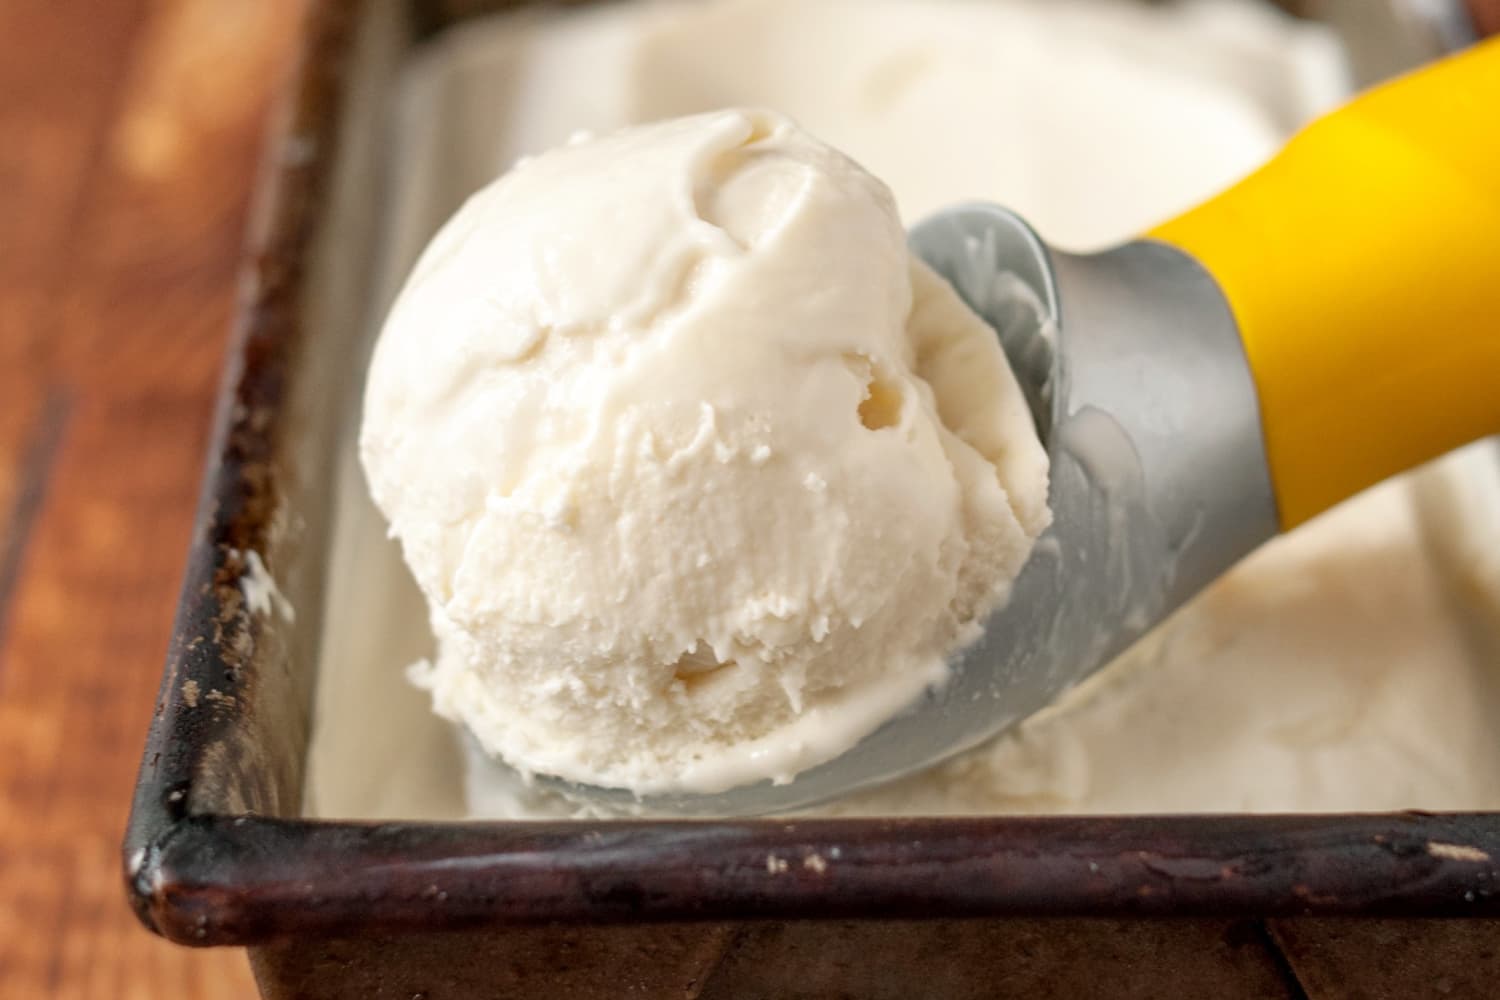 How to Make Ice Cream